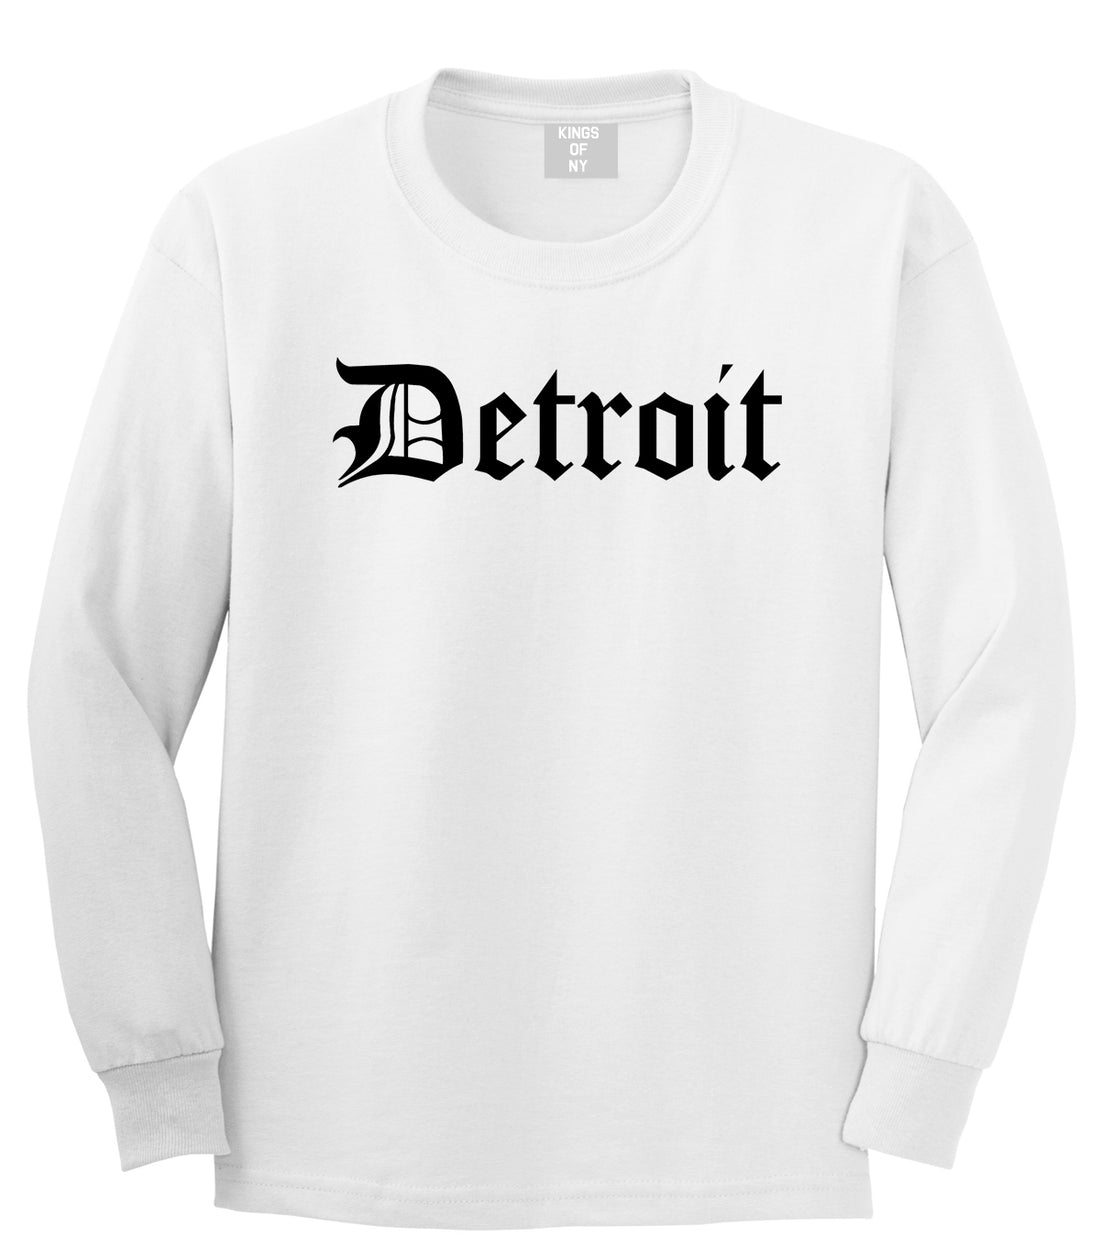 Detroit Old English Mens Long Sleeve T-Shirt White